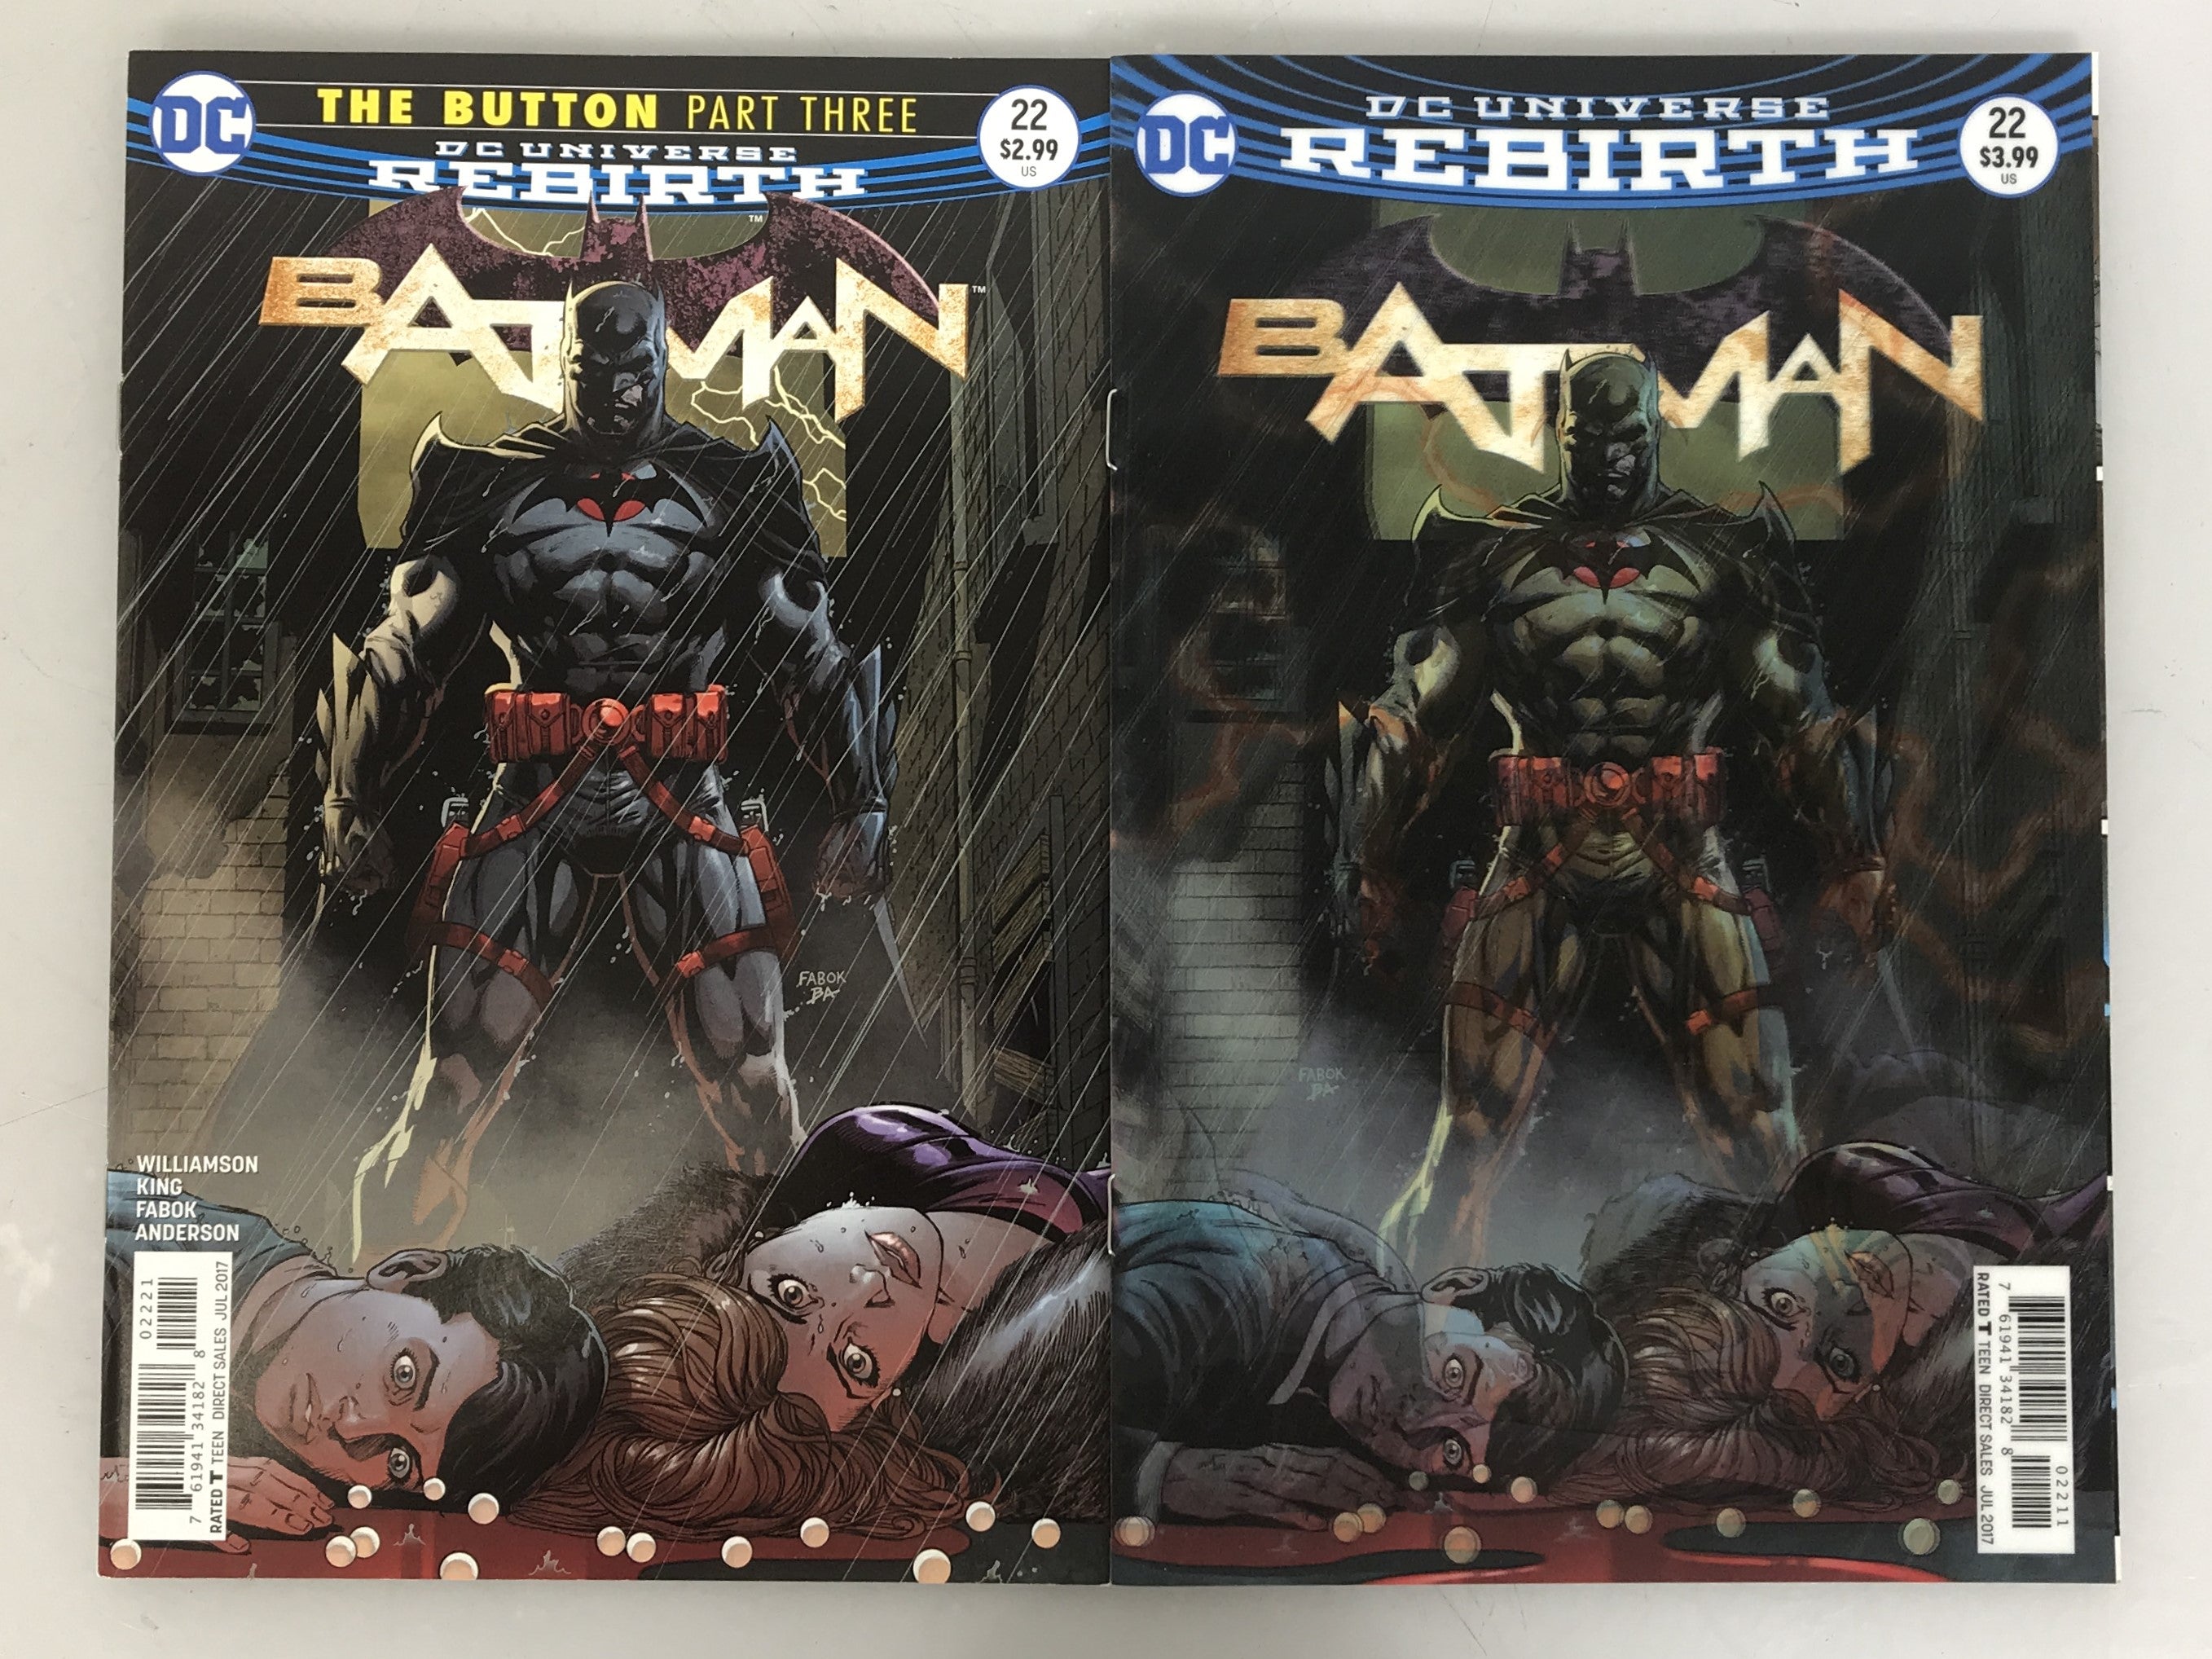 Lot of 2 Batman 22 2017 Variant Covers